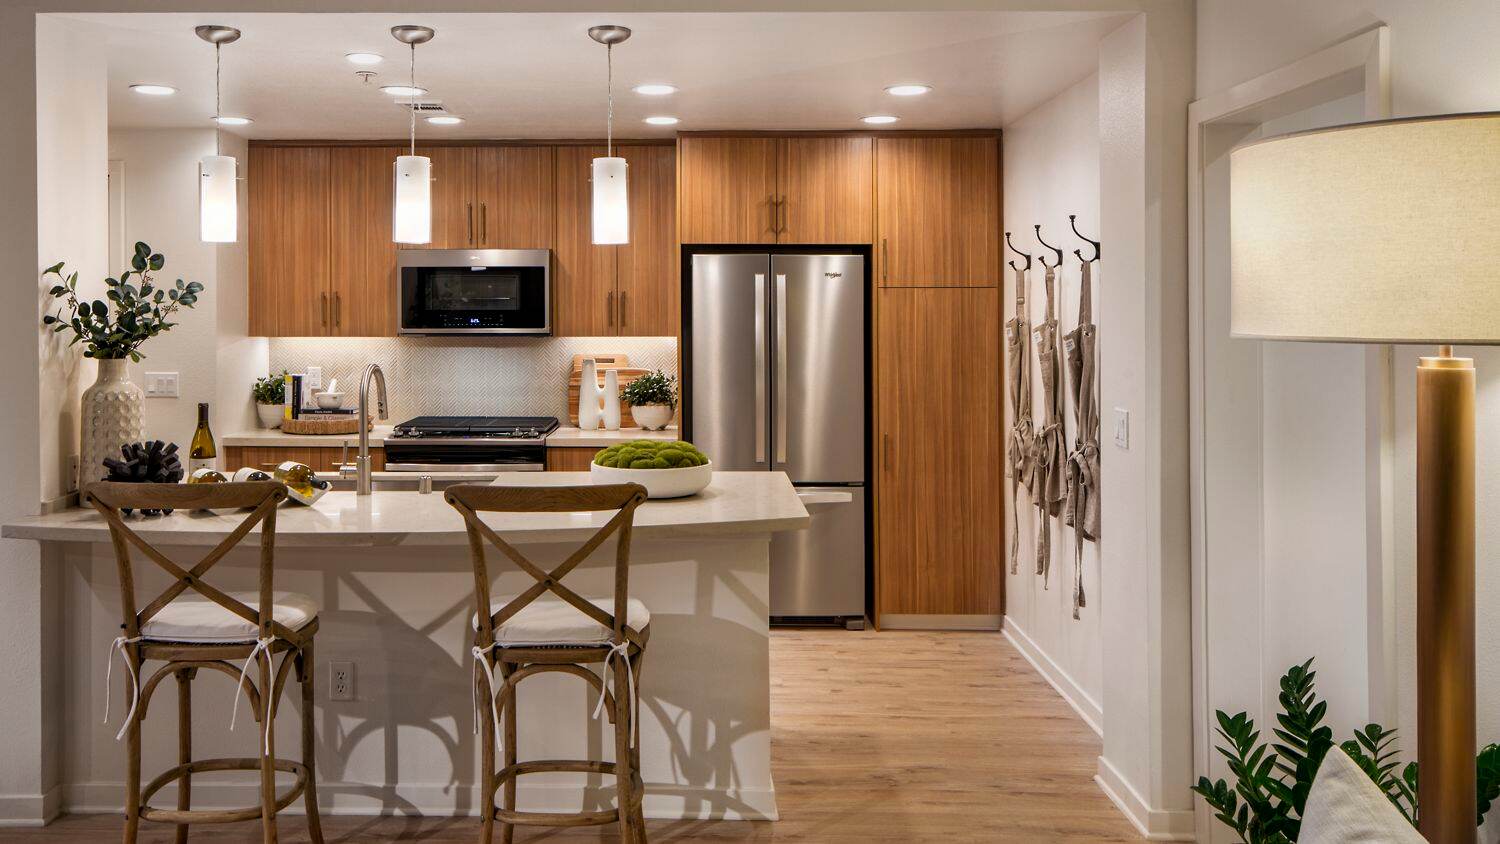 Interior view of kitchen at Delrey at The Village at Irvine Spectrum Apartment Homes in Irvine, CA.